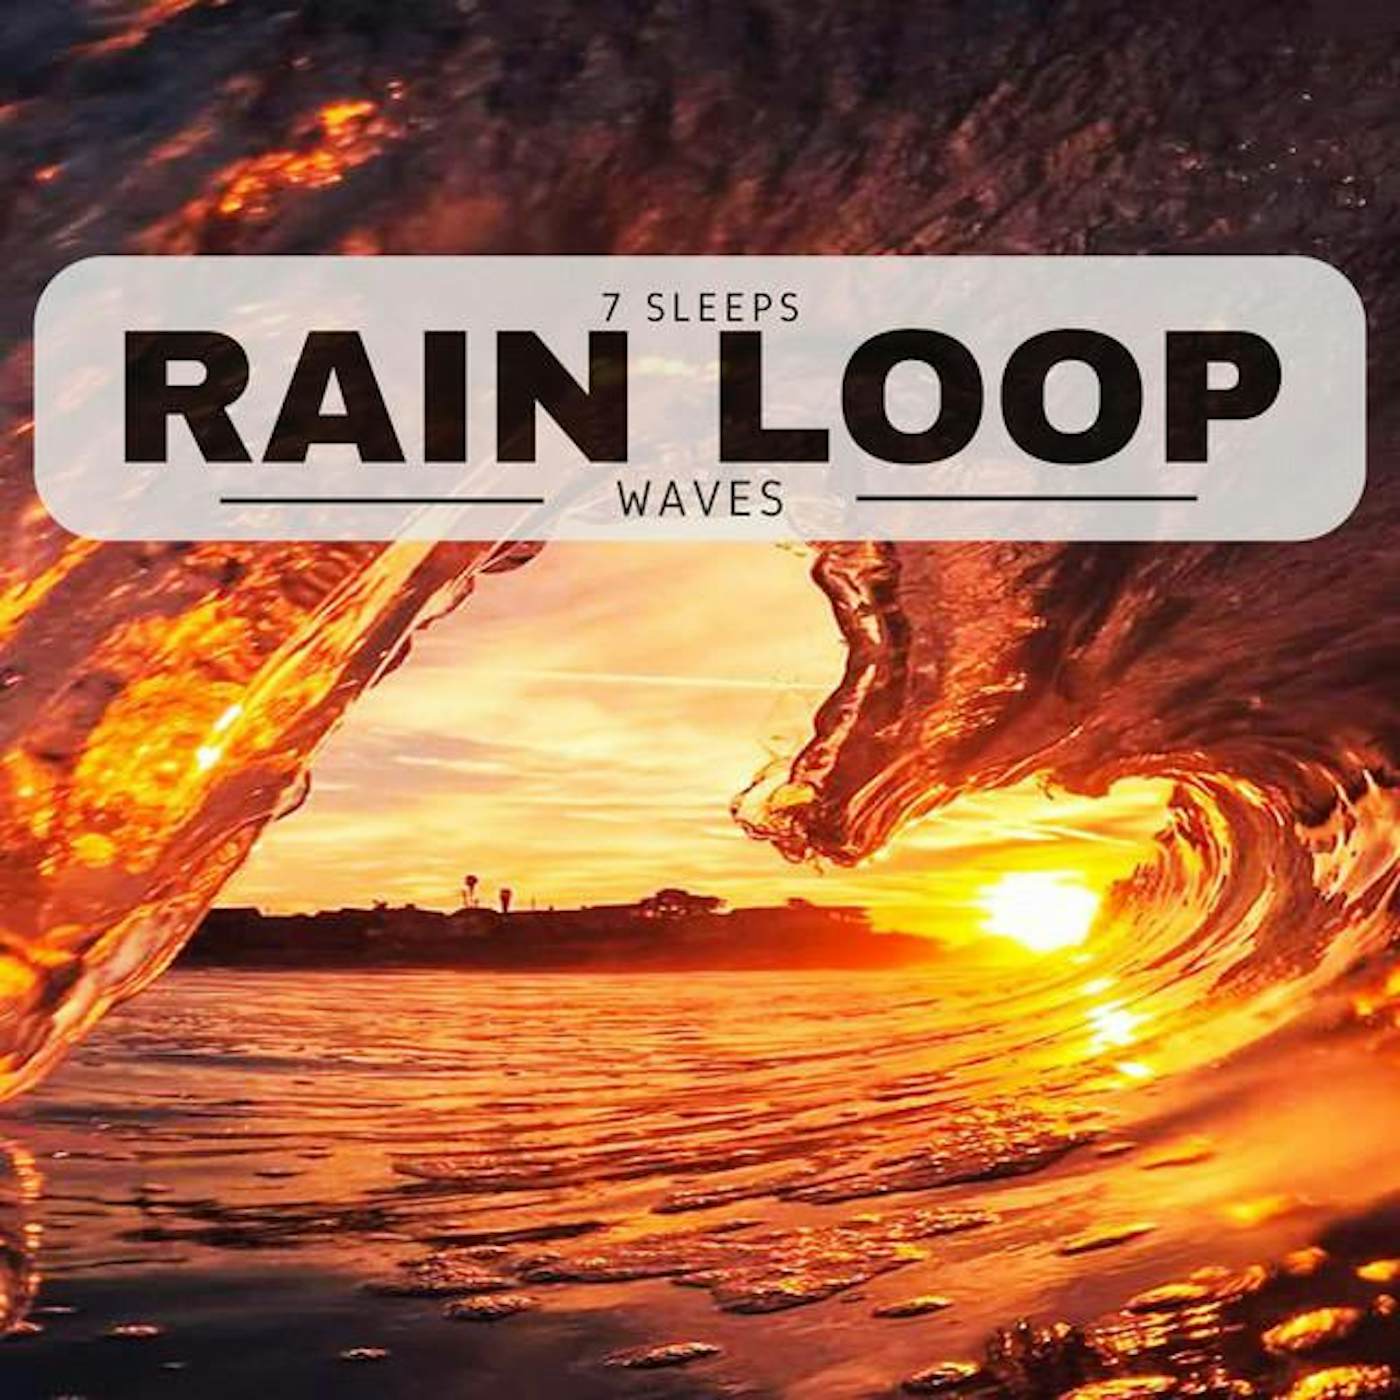 Rain Loop